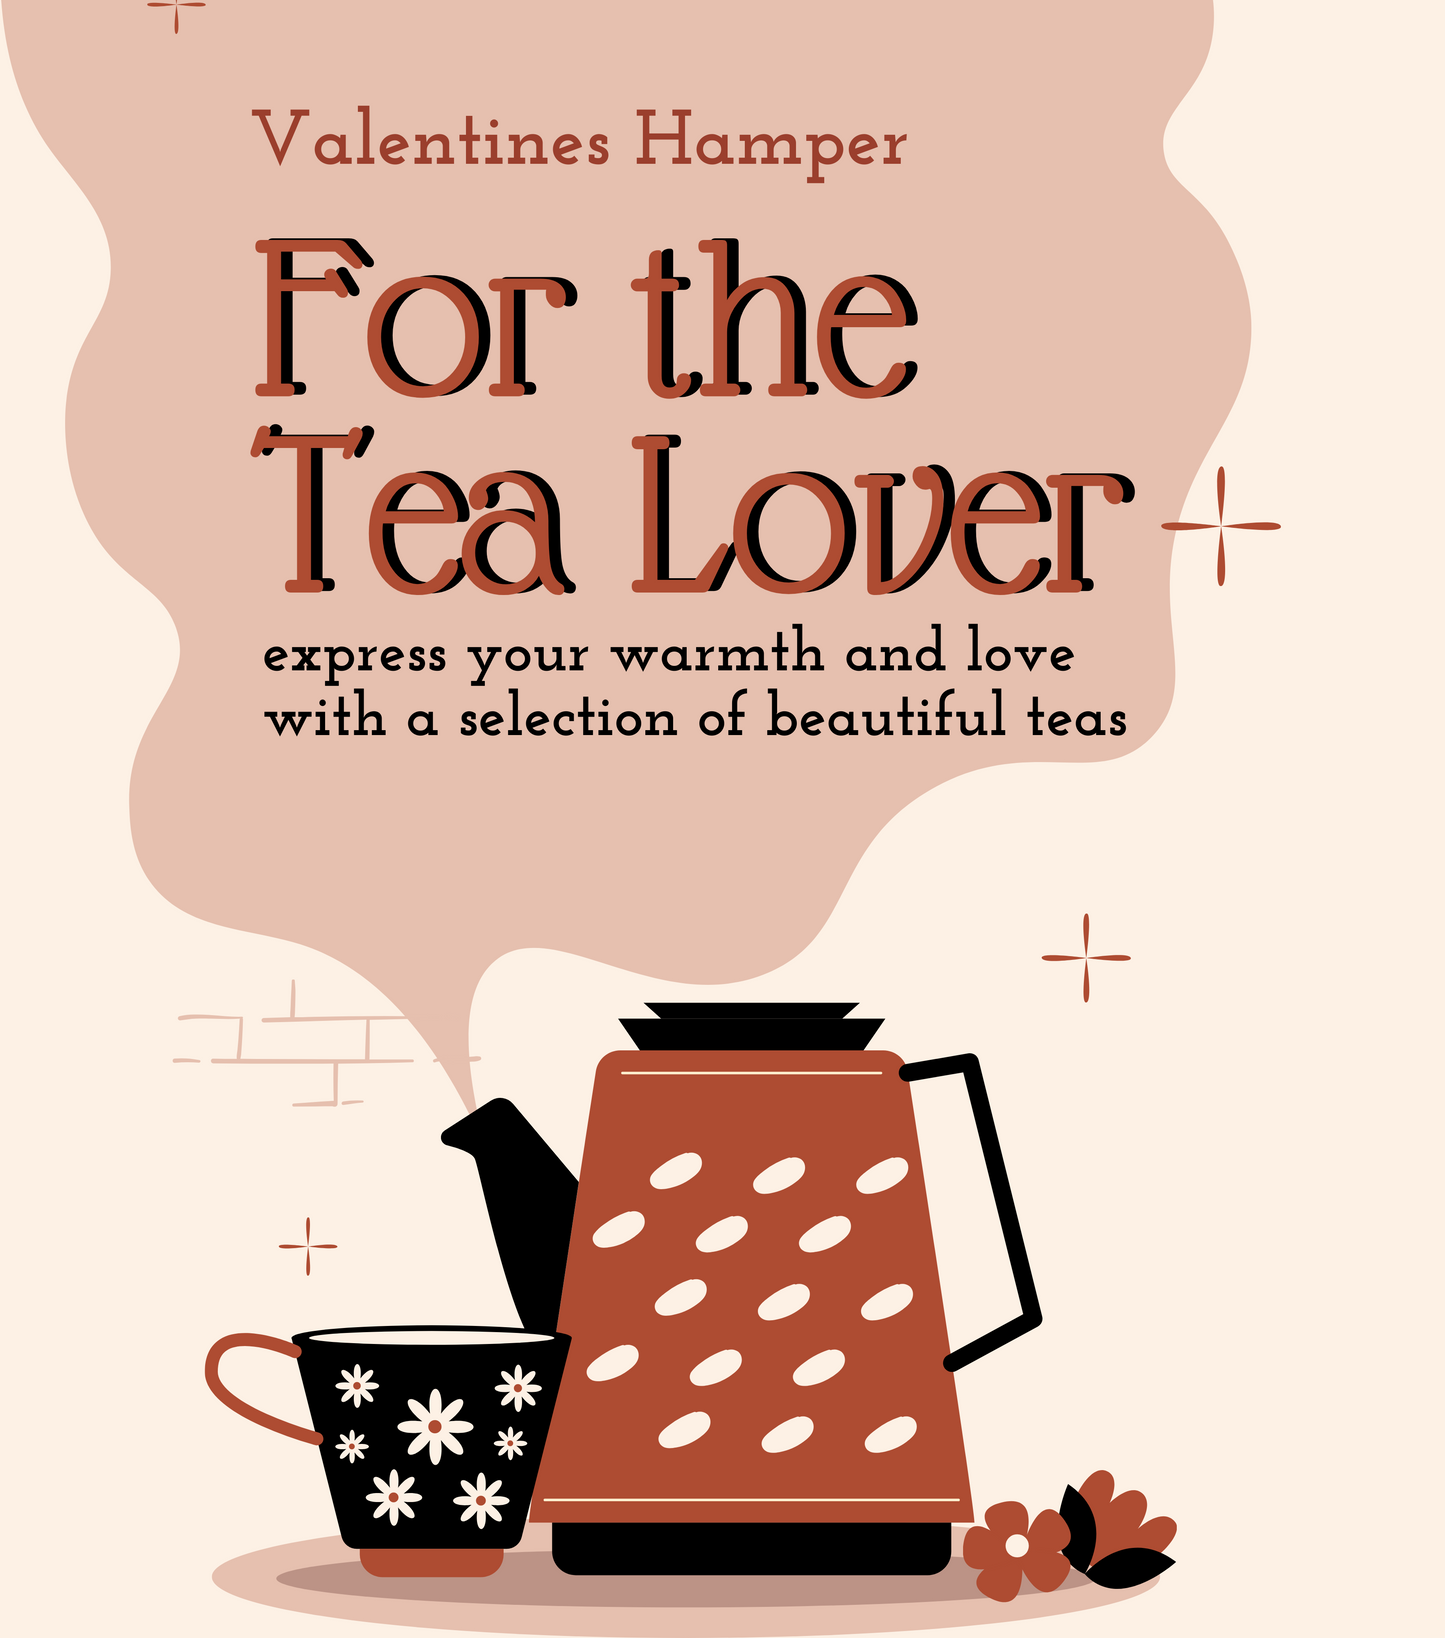 Valentines Day Hamper For the Tea Lover